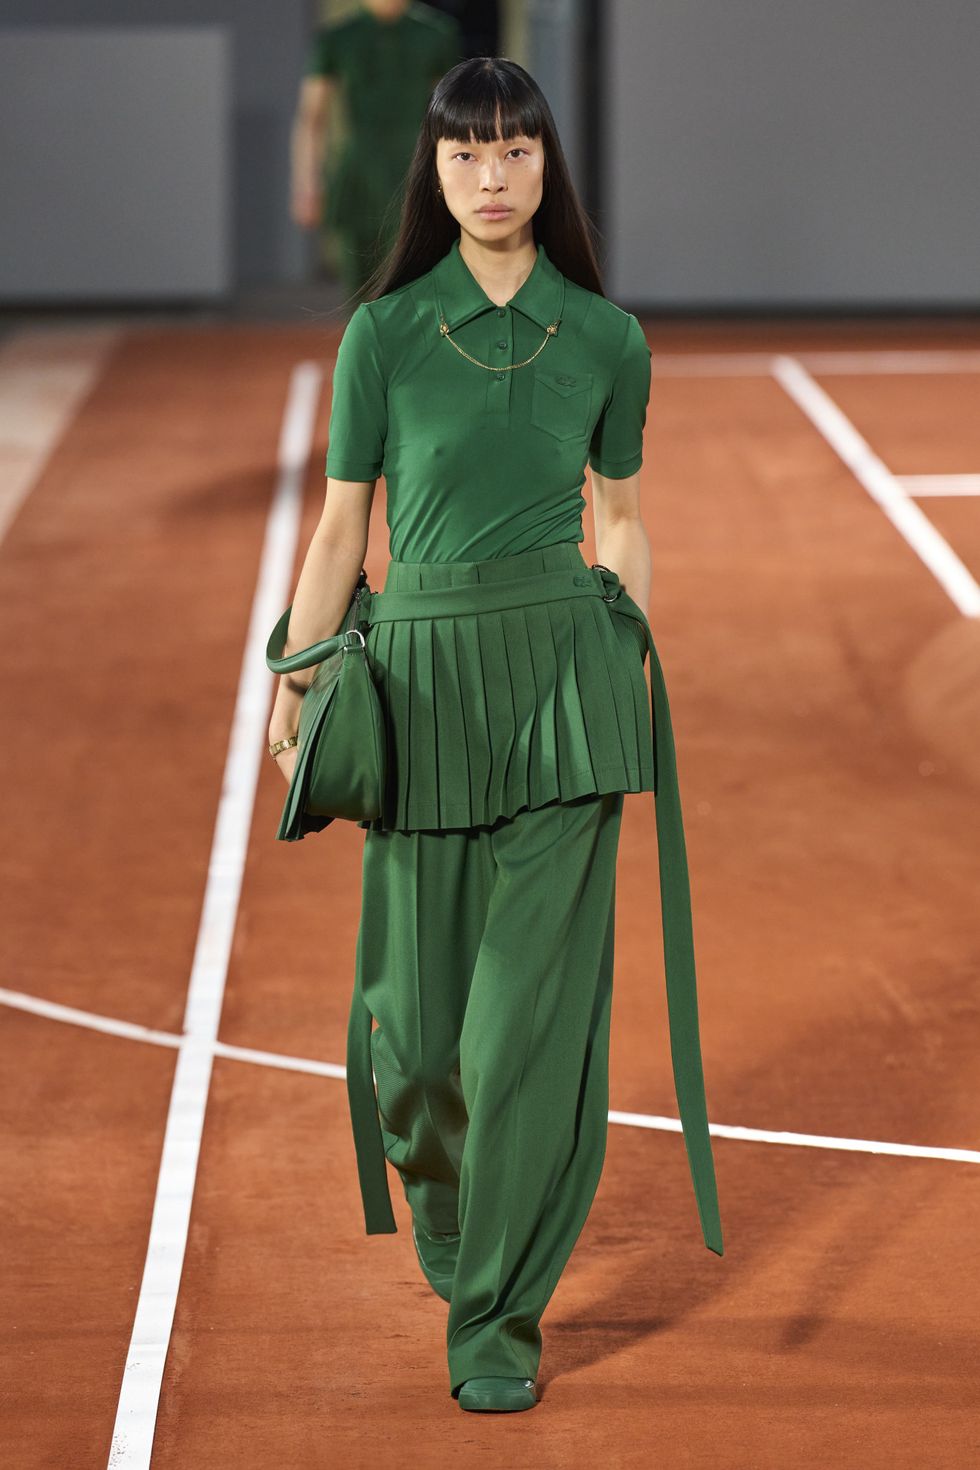 a woman in a green dress holding a tennis racket